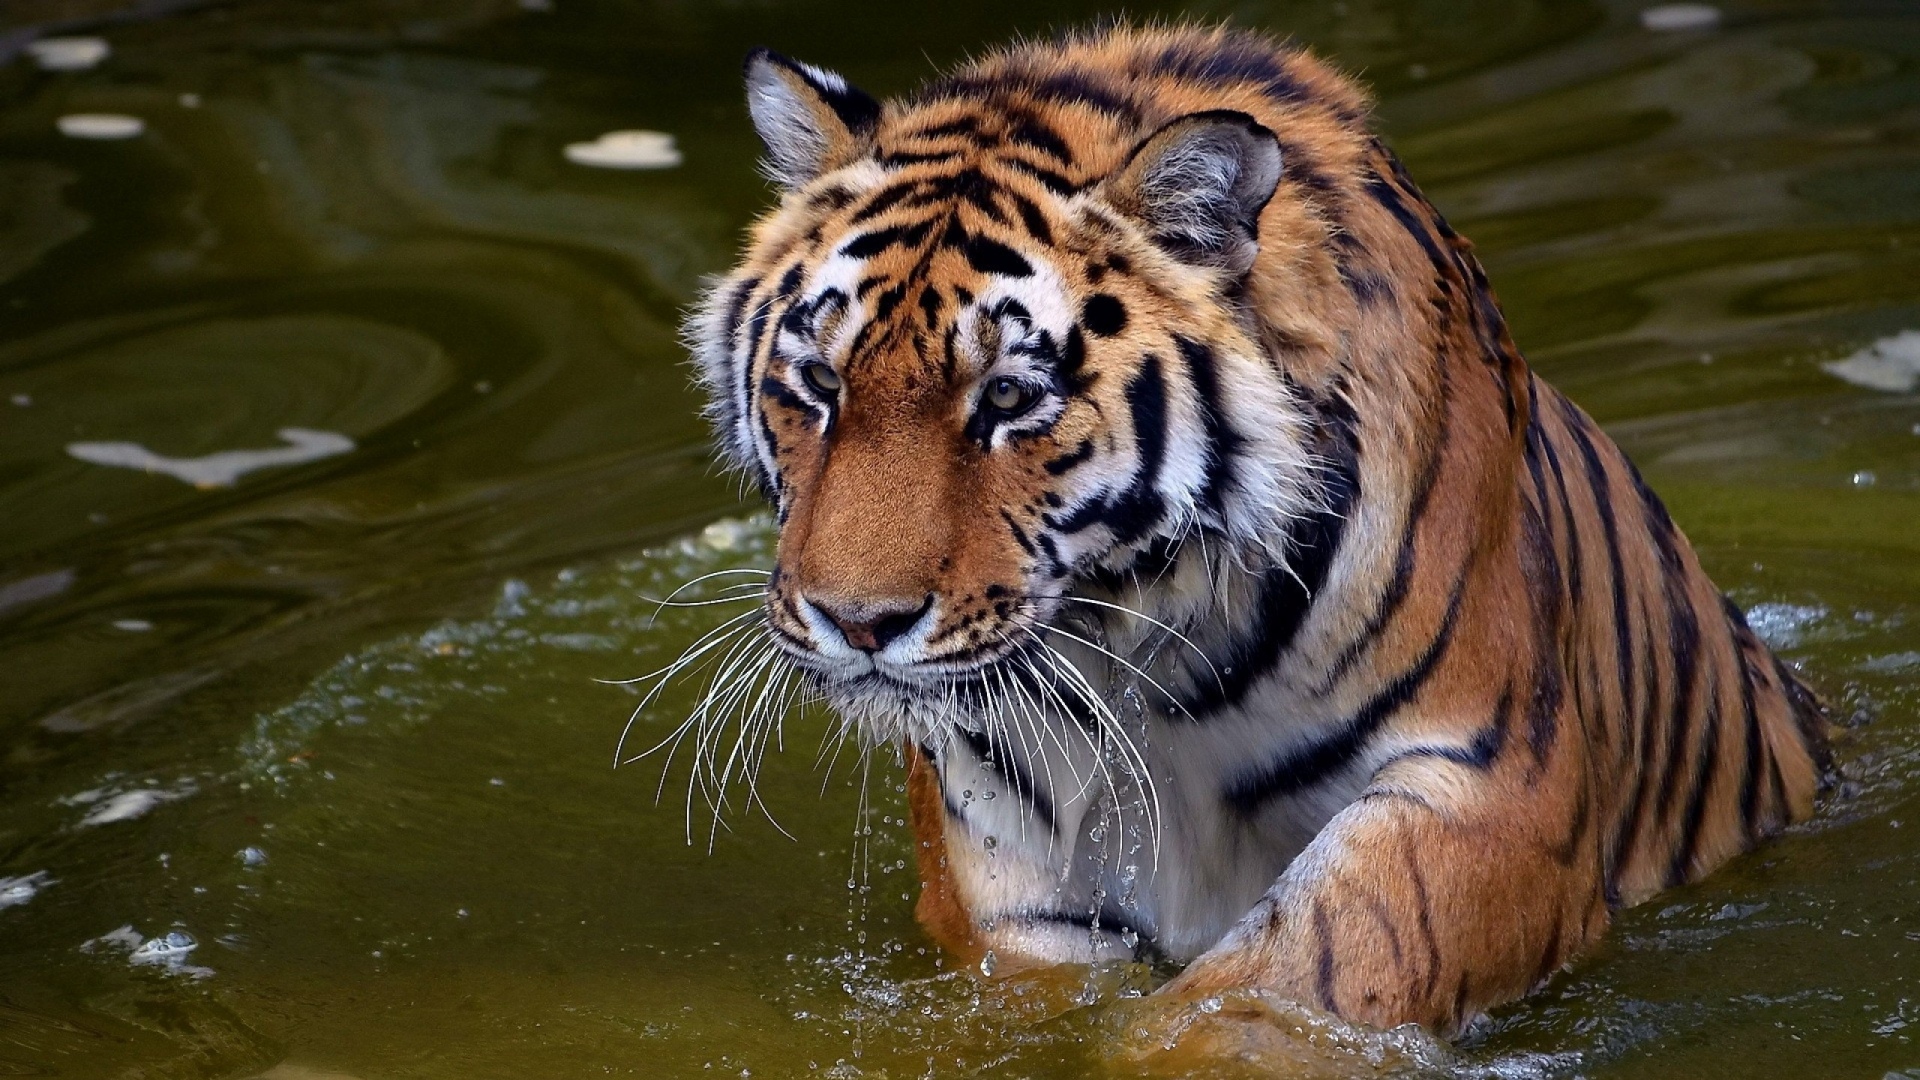  Tiger Face Predator Water Swim Wallpaper Background Full HD 1080p 1920x1080